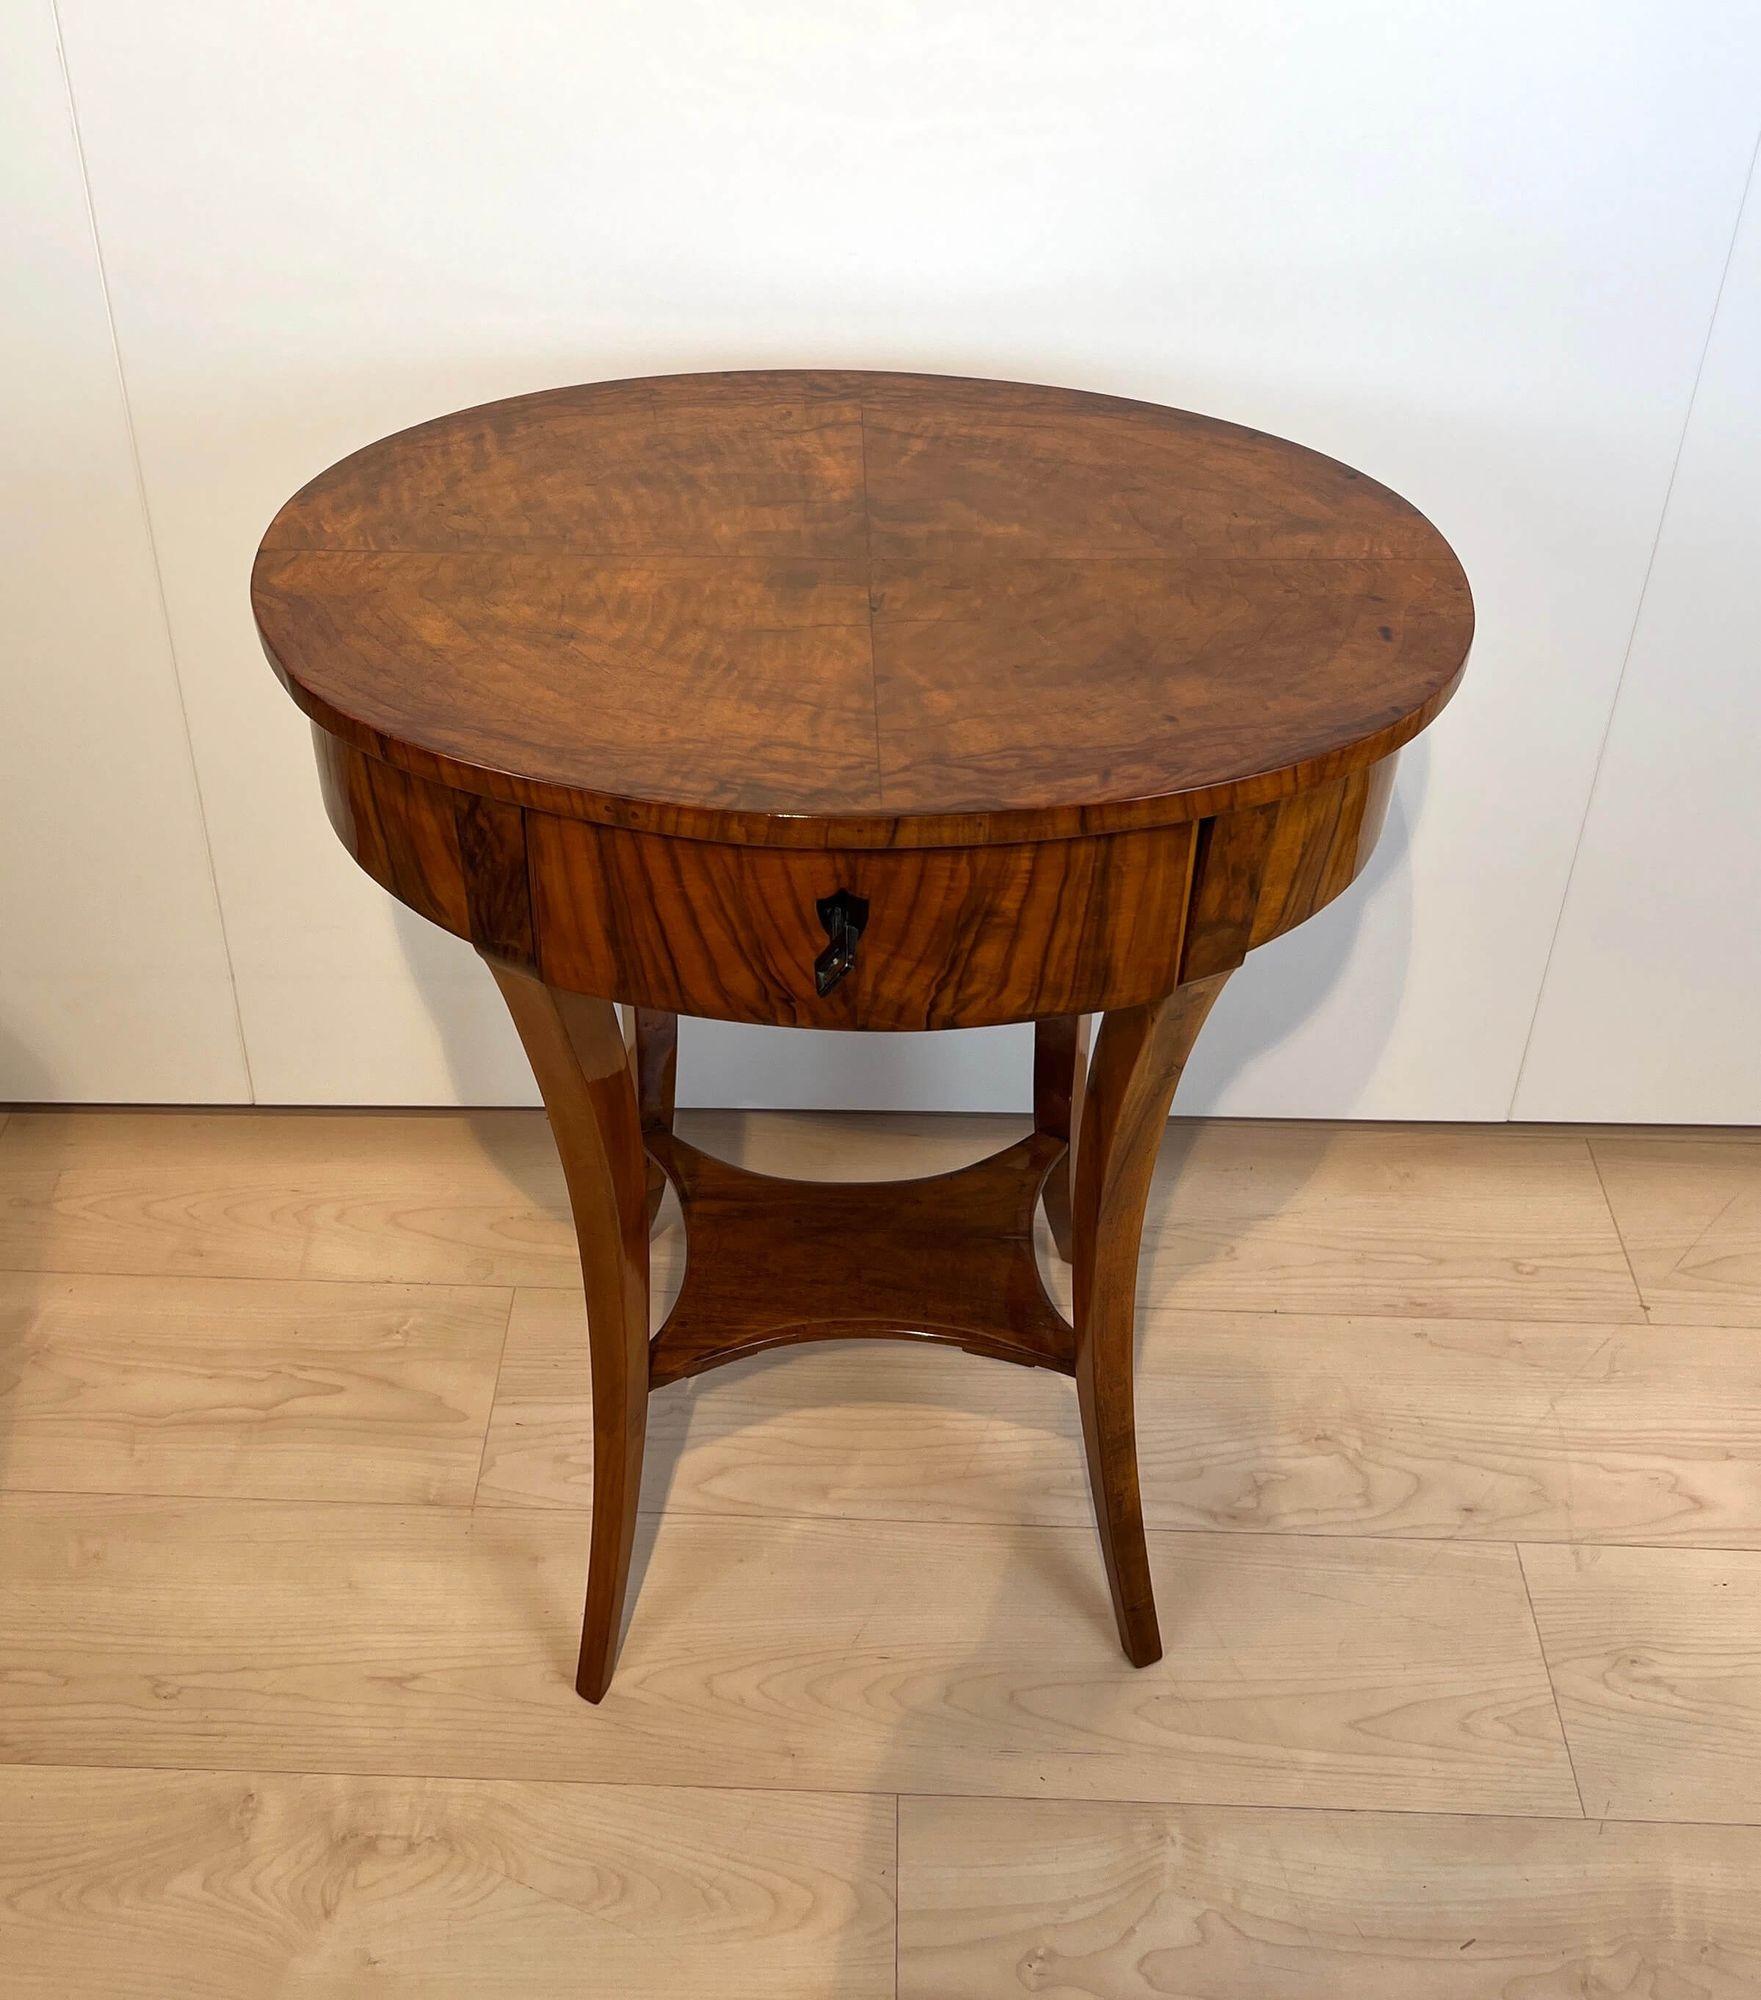 Polished Oval Biedermeier Side Table with Drawer, Walnut Veneer, South Germany circa 1820